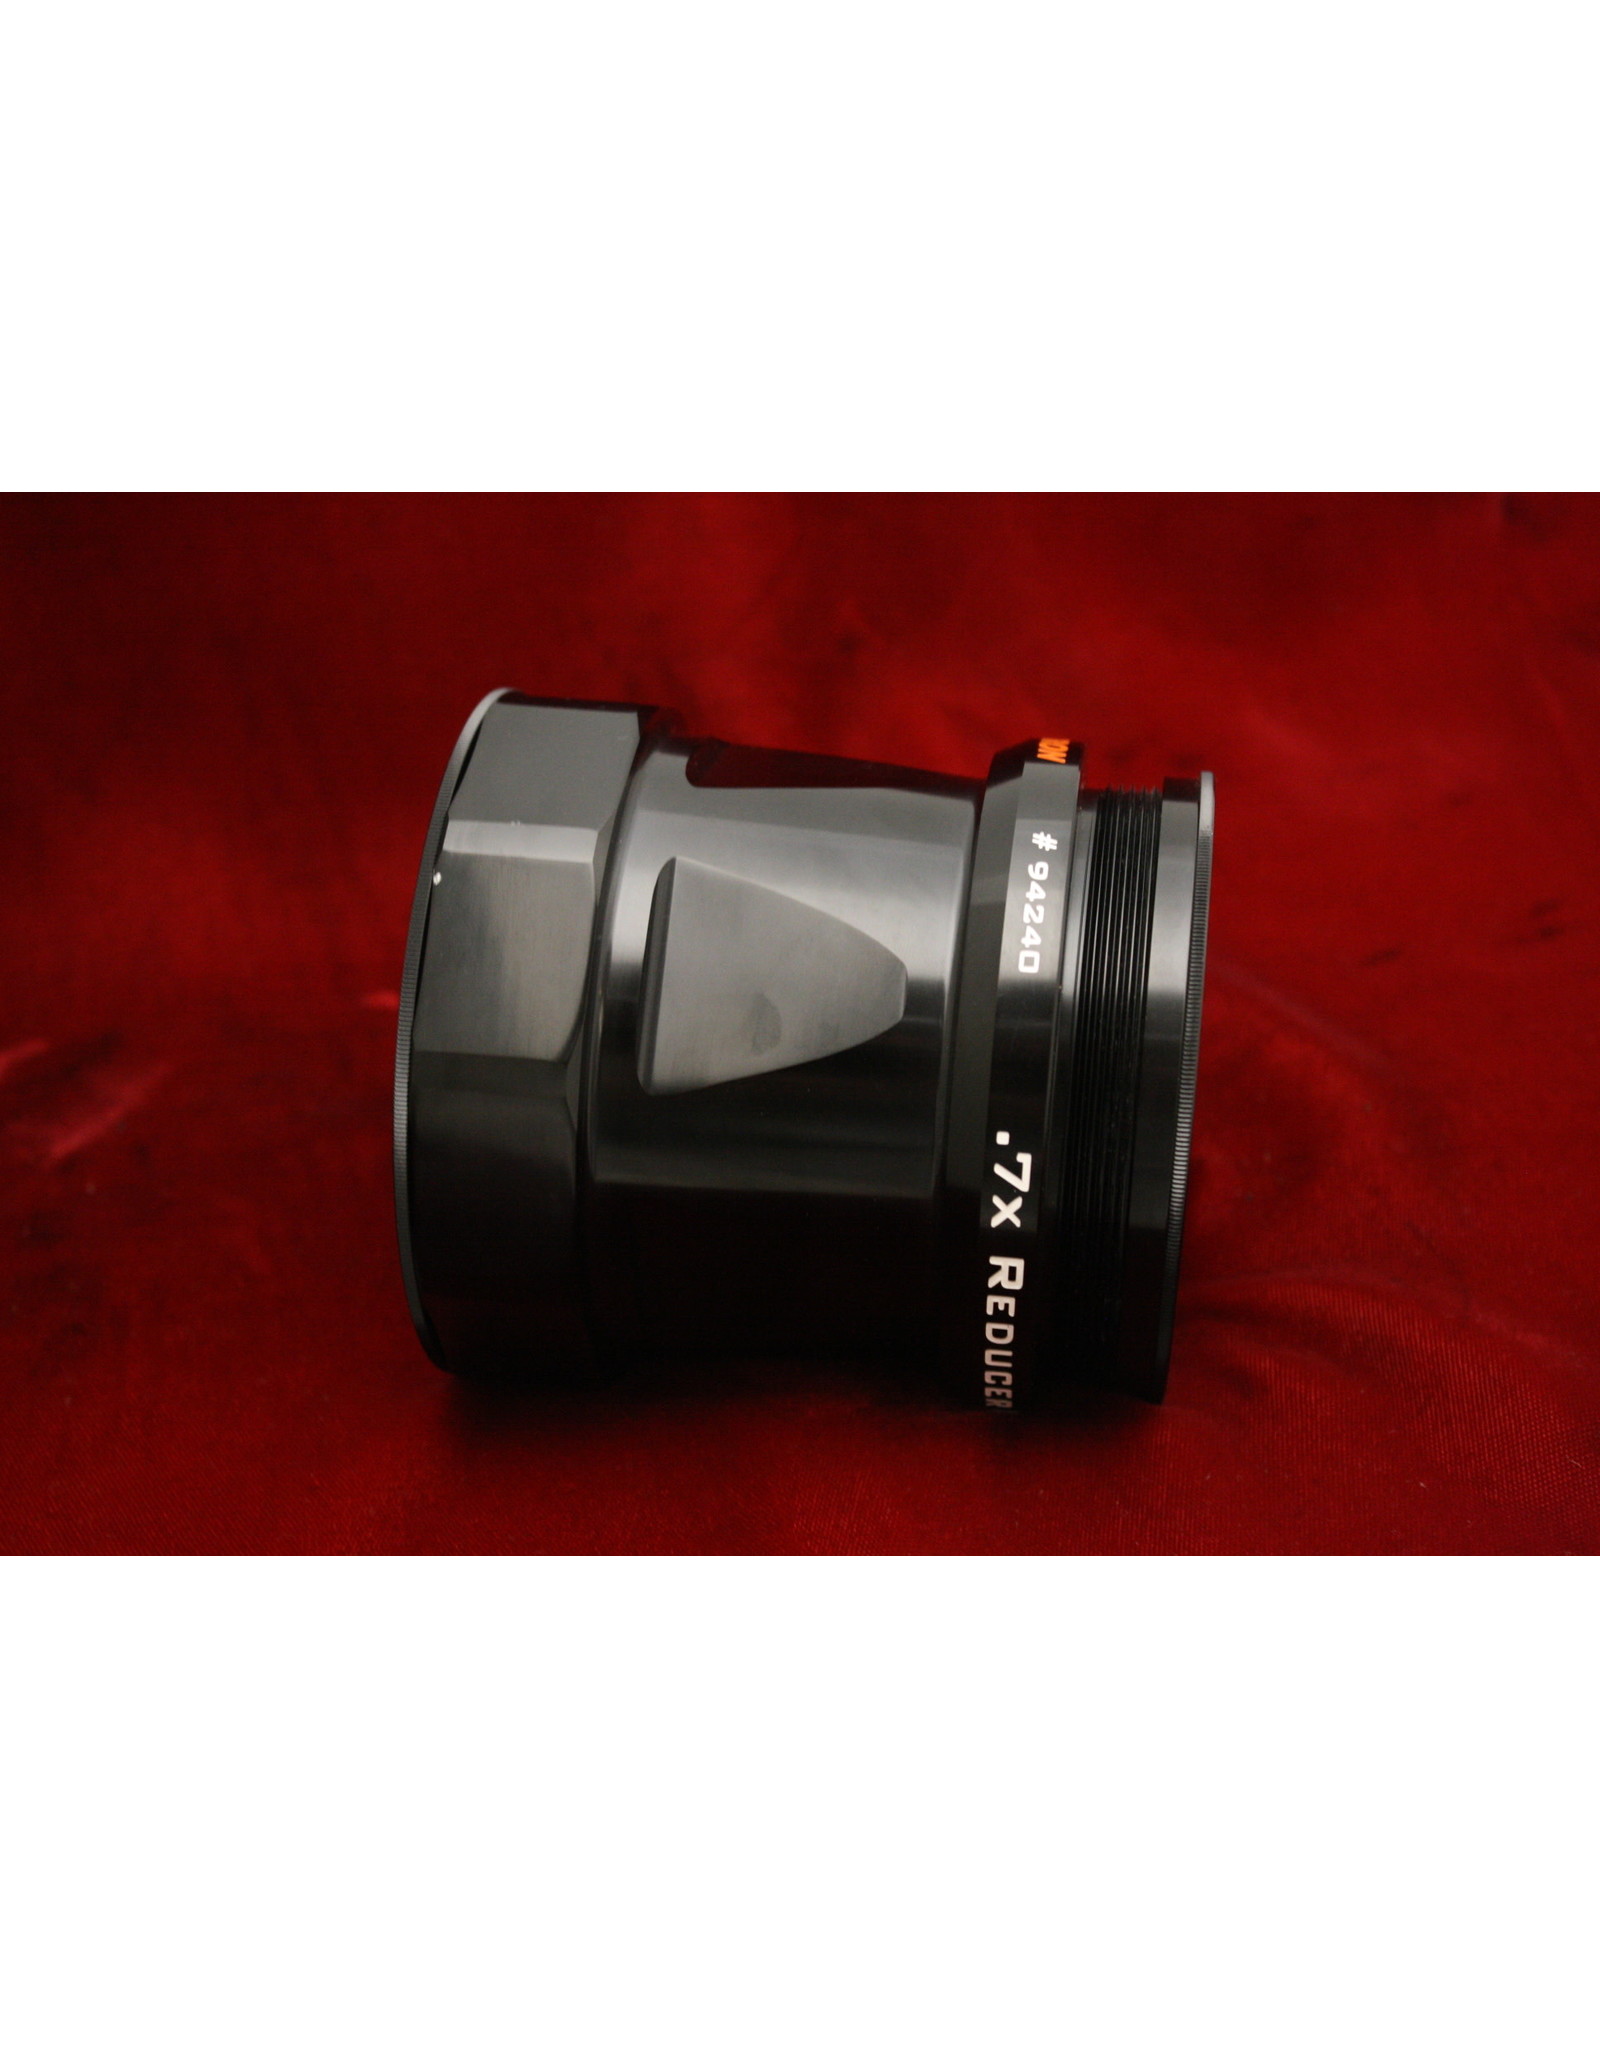 Celestron Celestron Reducer Lens .7x - EdgeHD 1400 (Pre-owned)